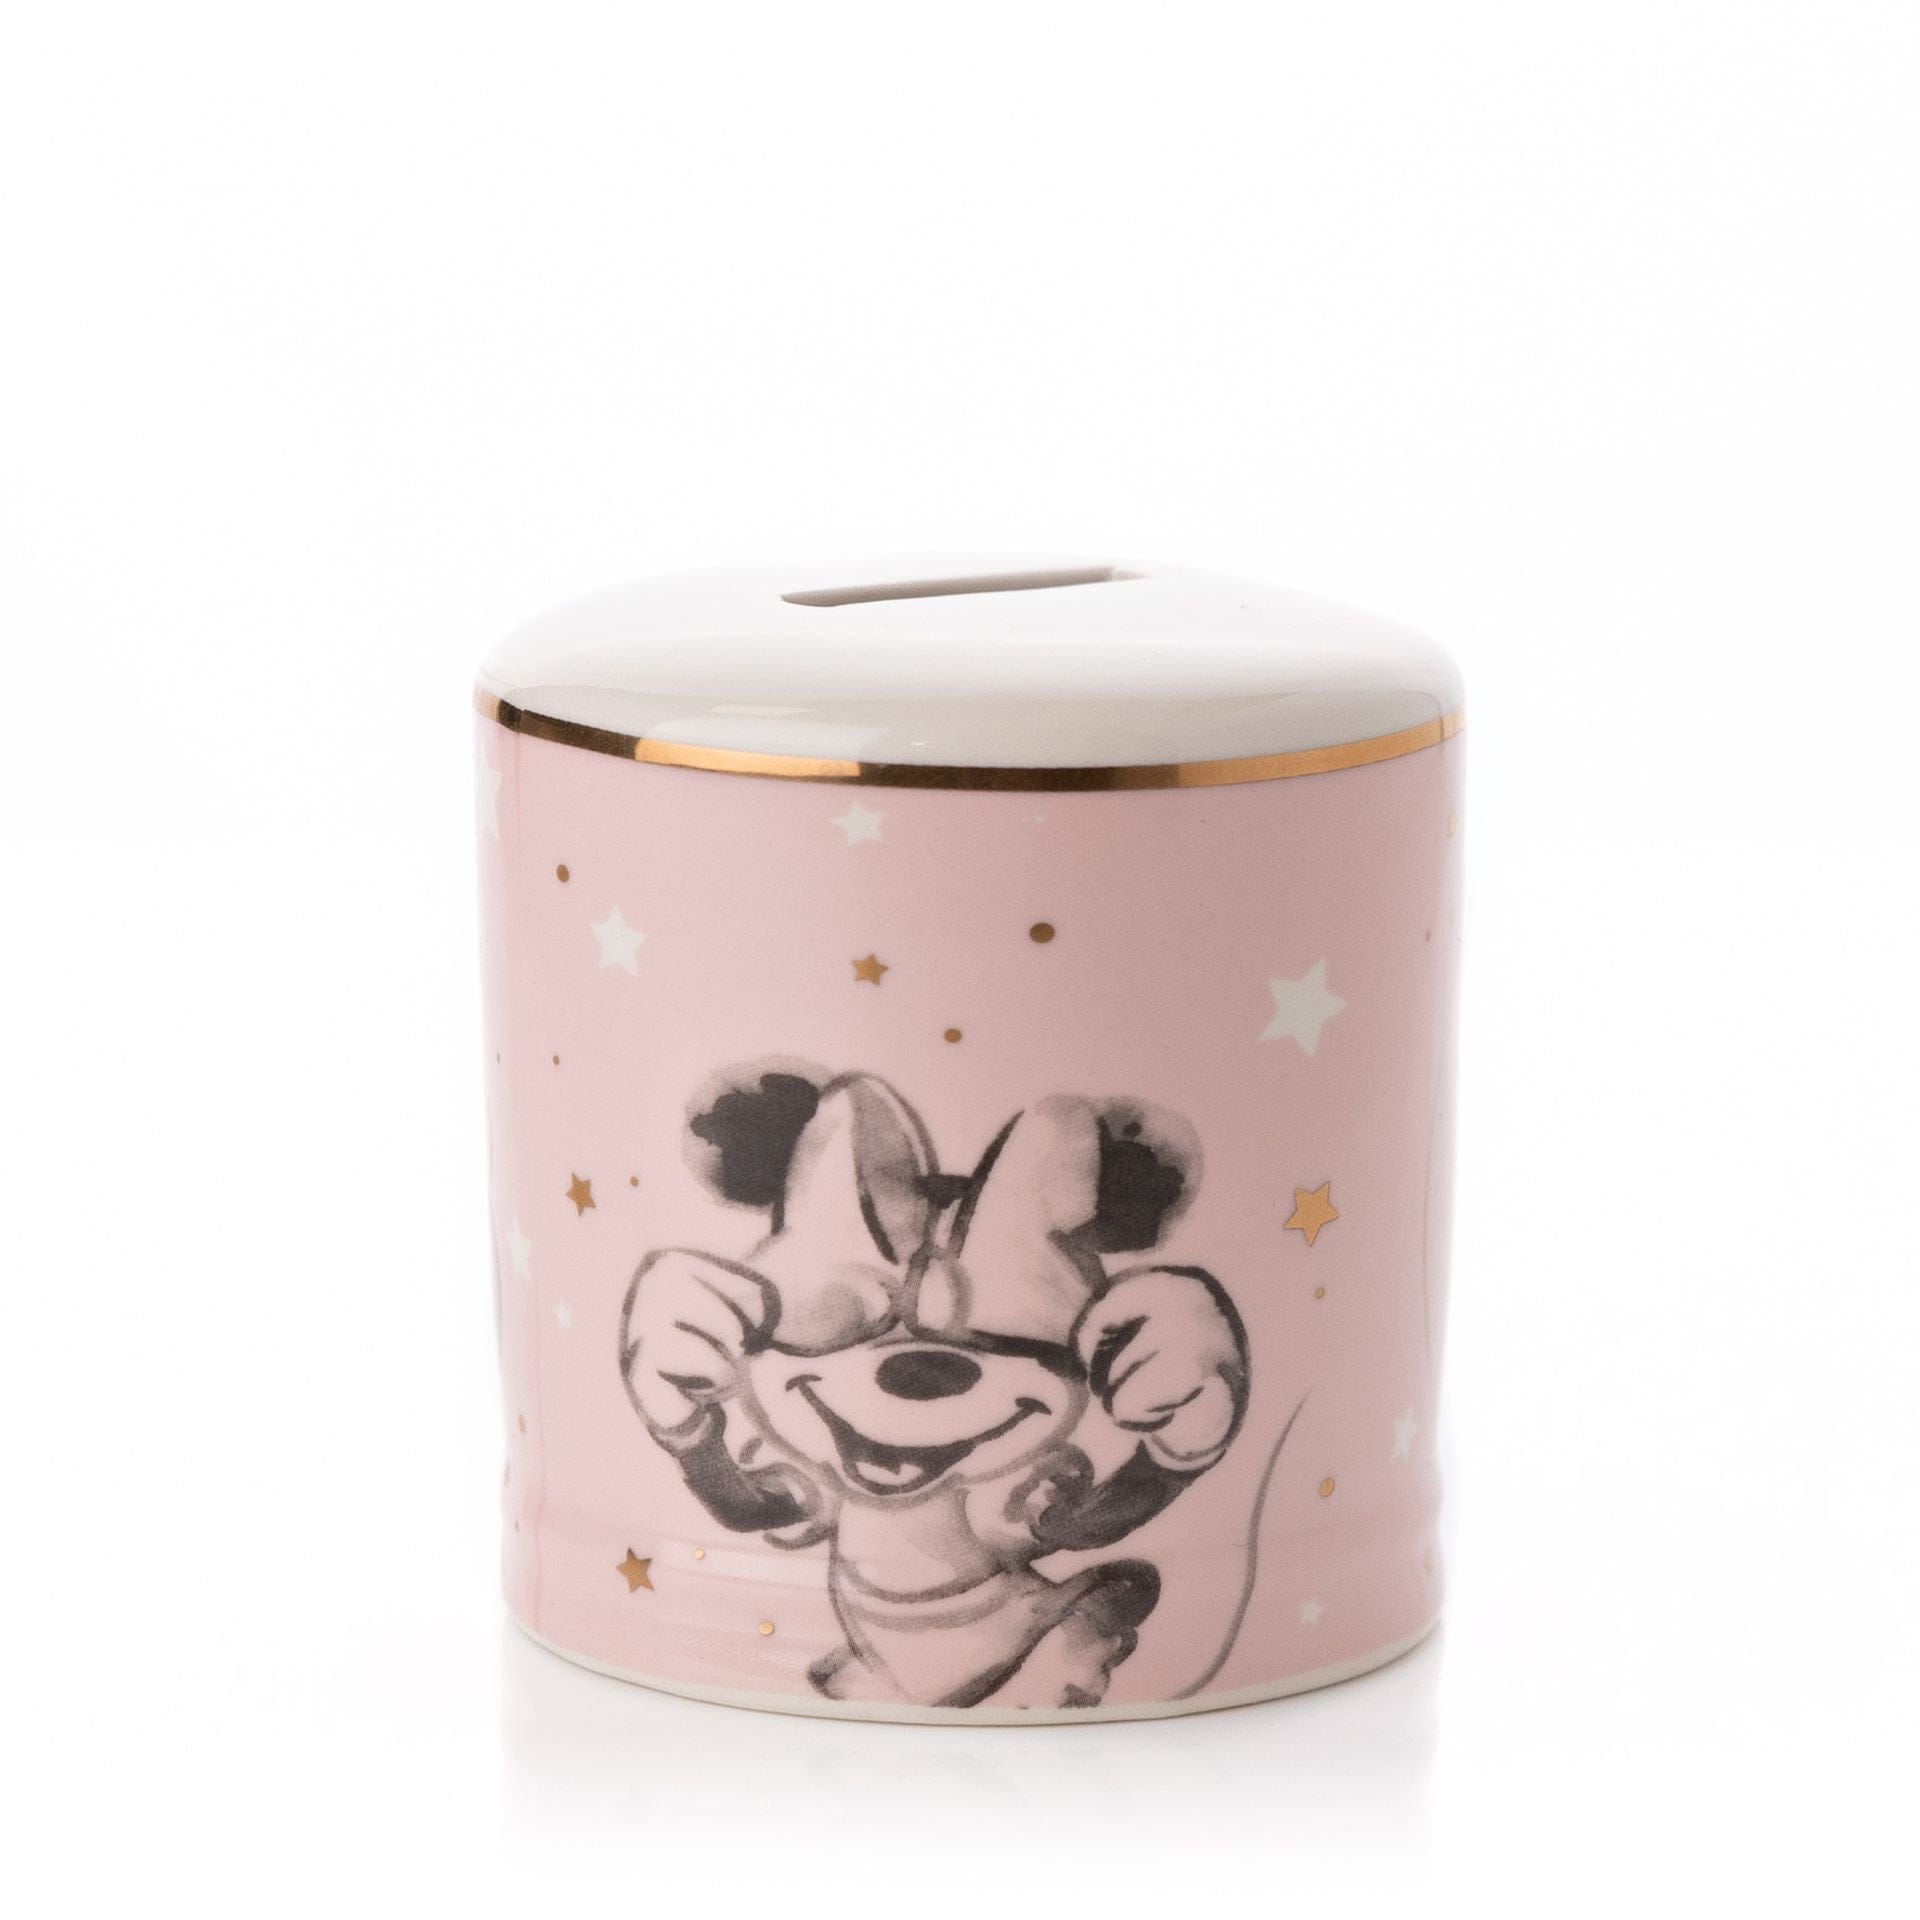 Disney Money Box Disney Magical Beginnings Ceramic Money Box - Minnie Mouse - Pink